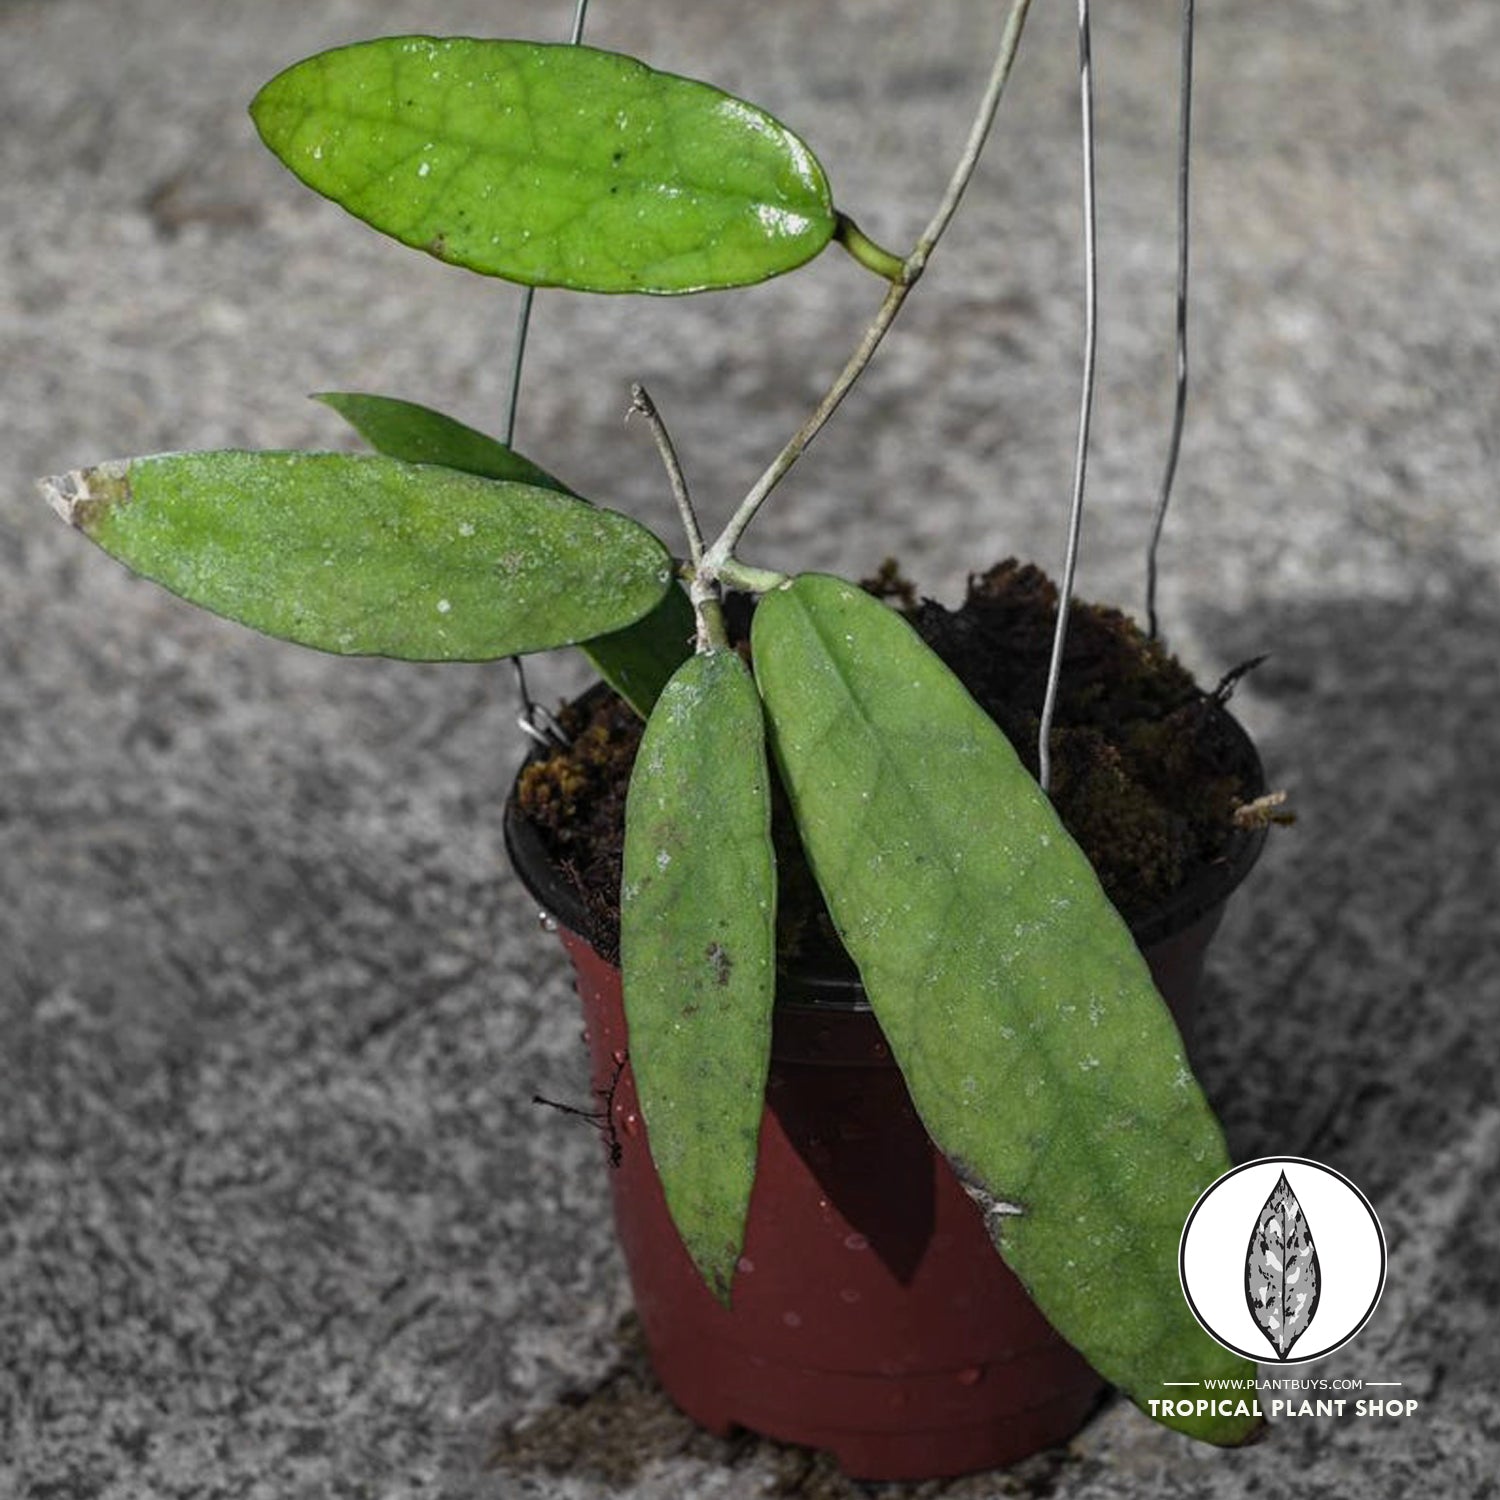 Hoya Scortekcinii Sp Borneo Plant growing in brown deep pot a cute little hoya native to the island of Borneo.